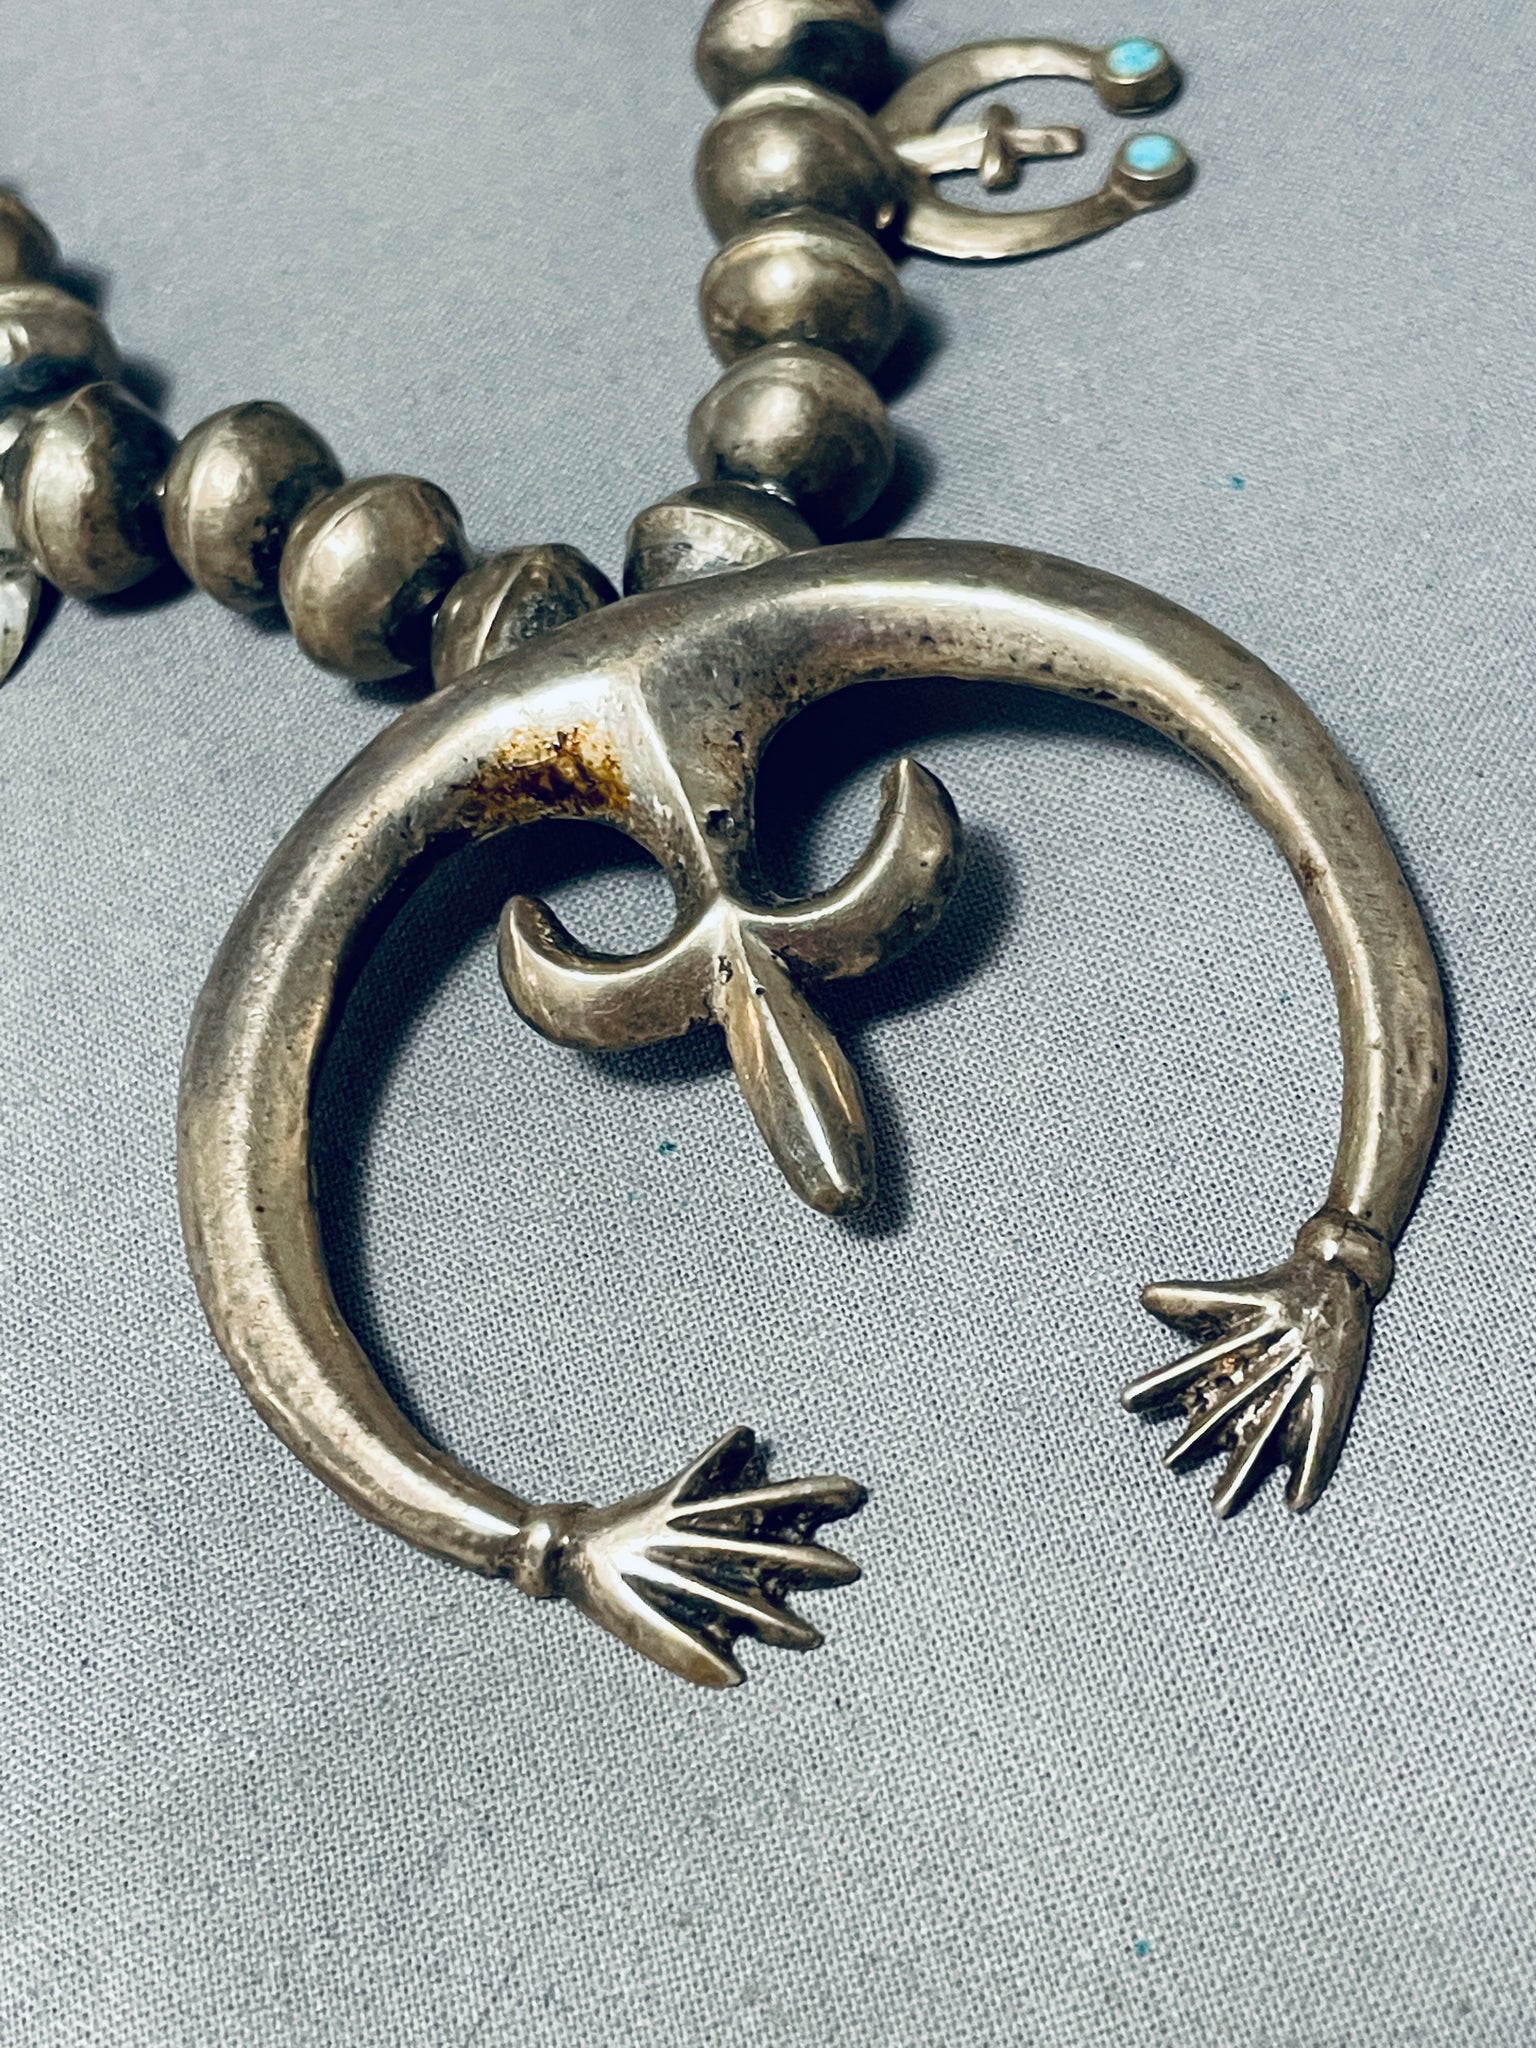 Vintage Squash Blossom Necklace with Naja Pendant